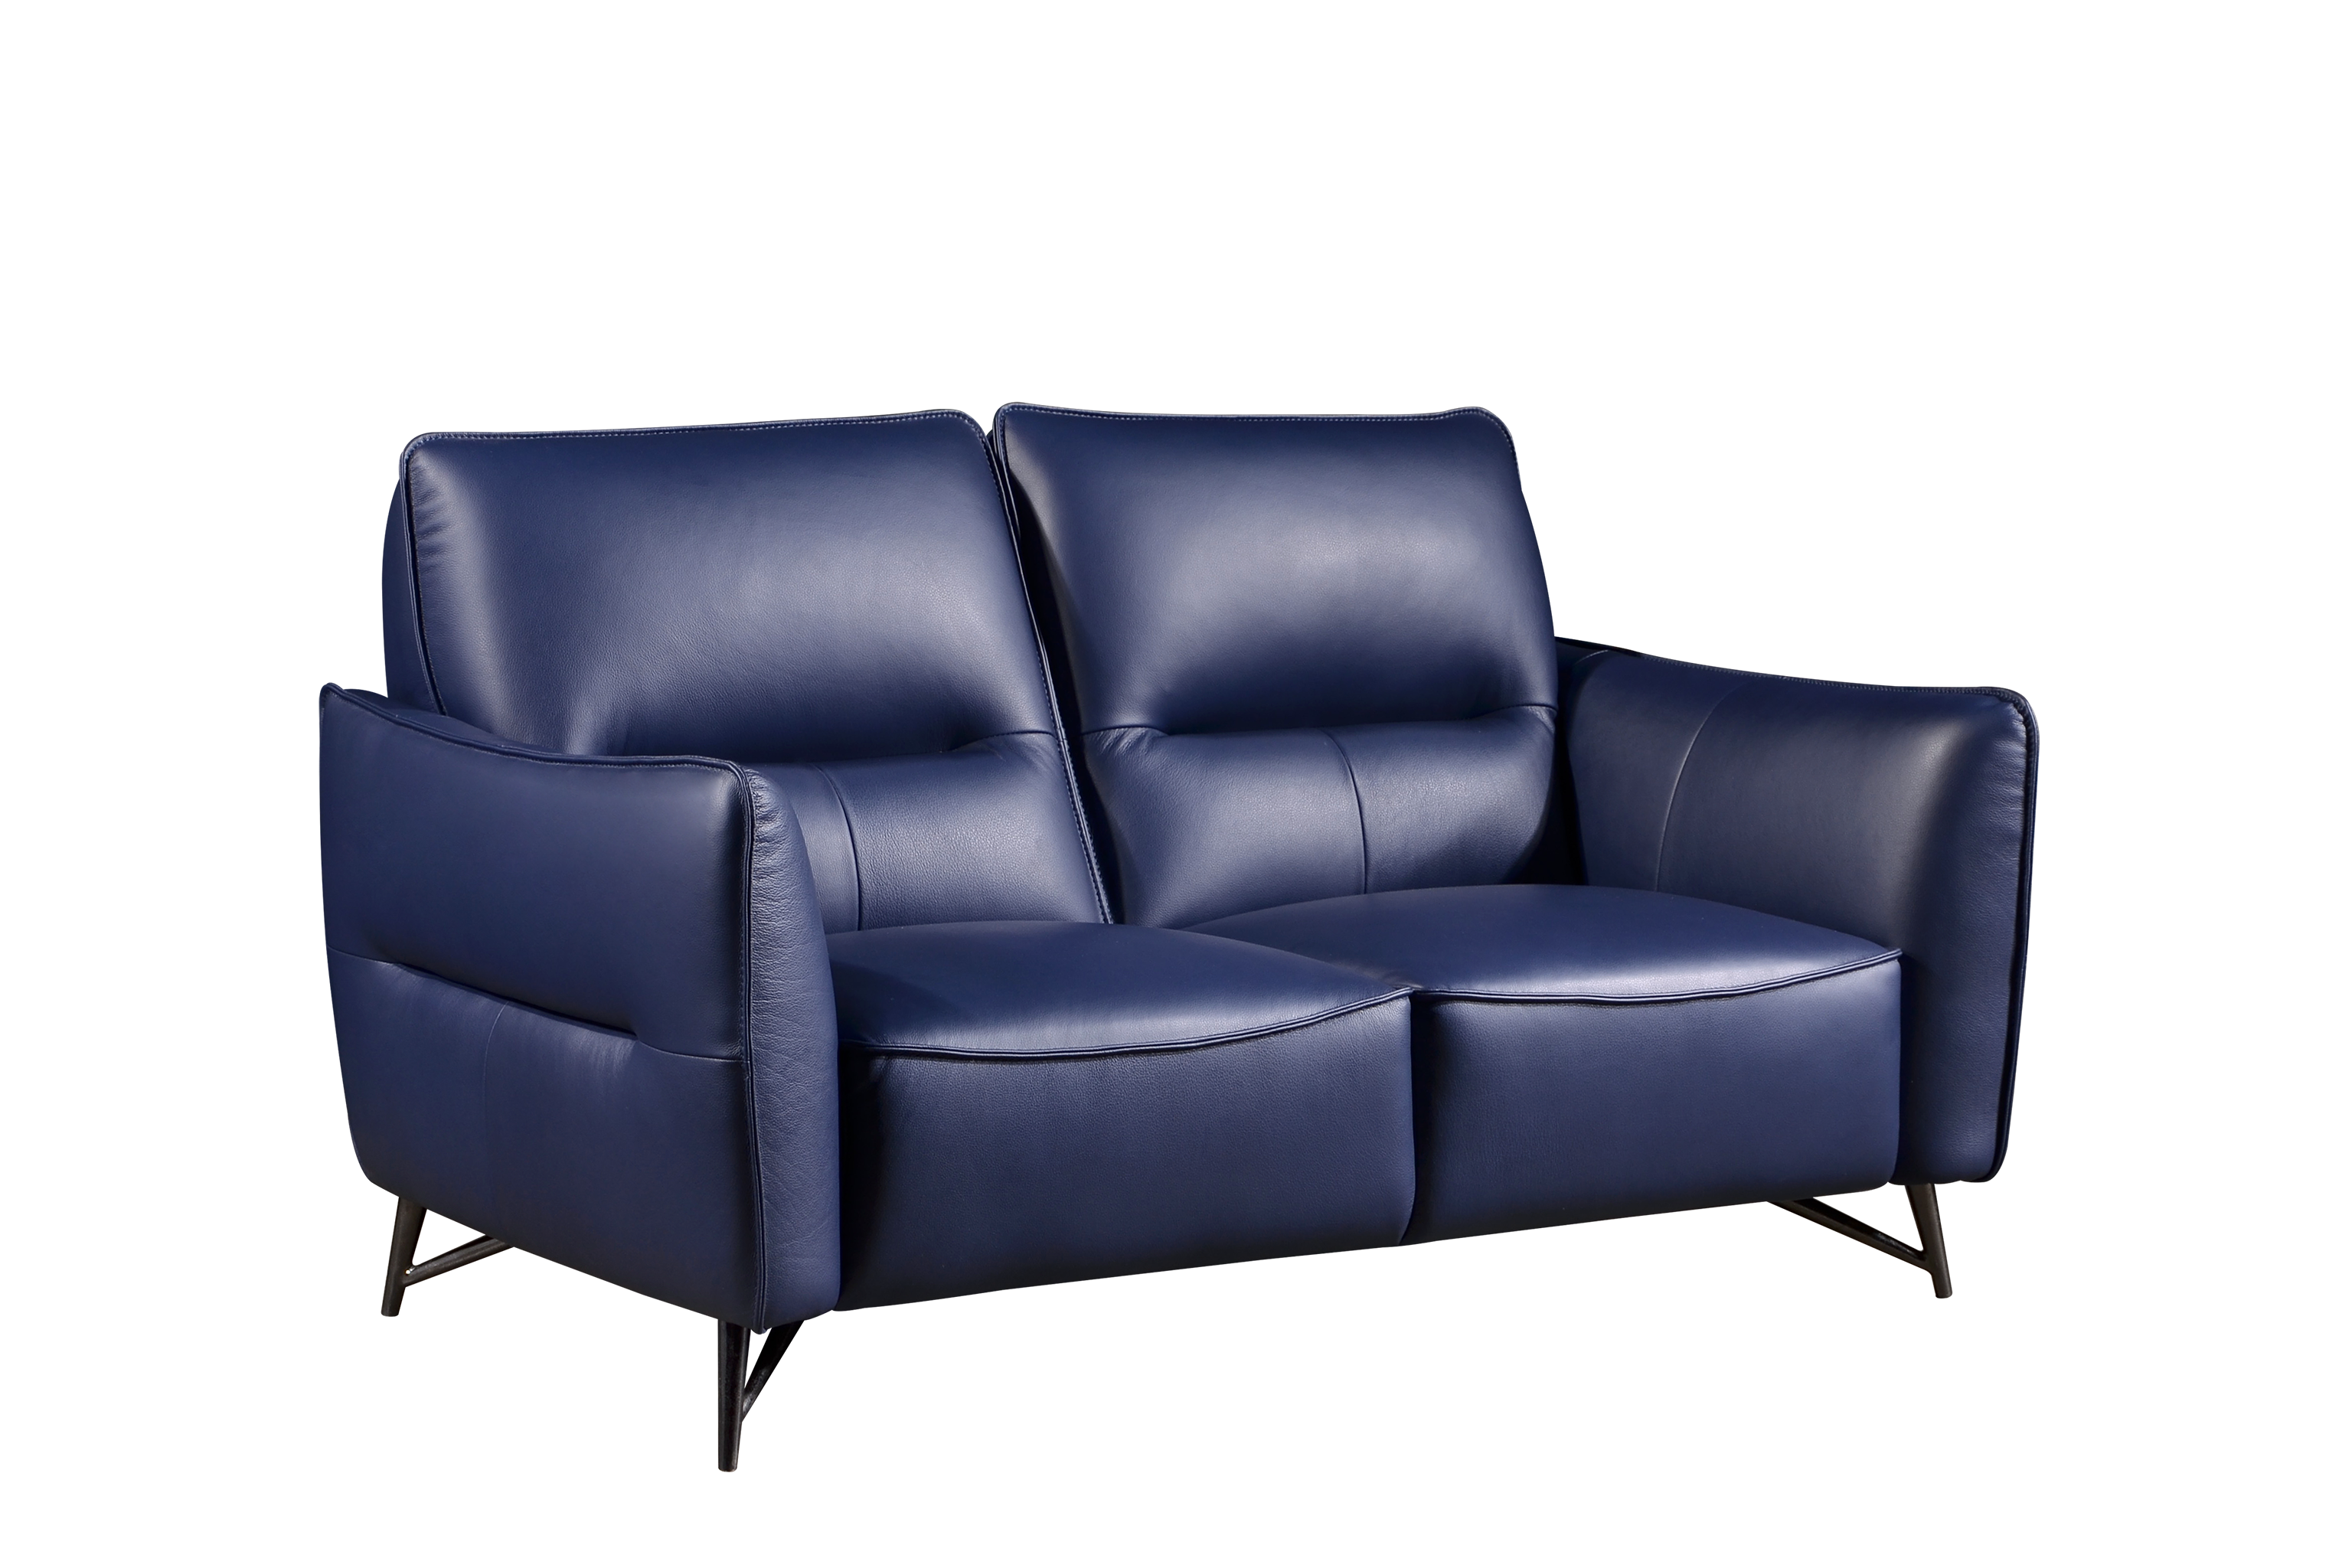 SORENA 2 Seater Sofa In Leather By Castilla